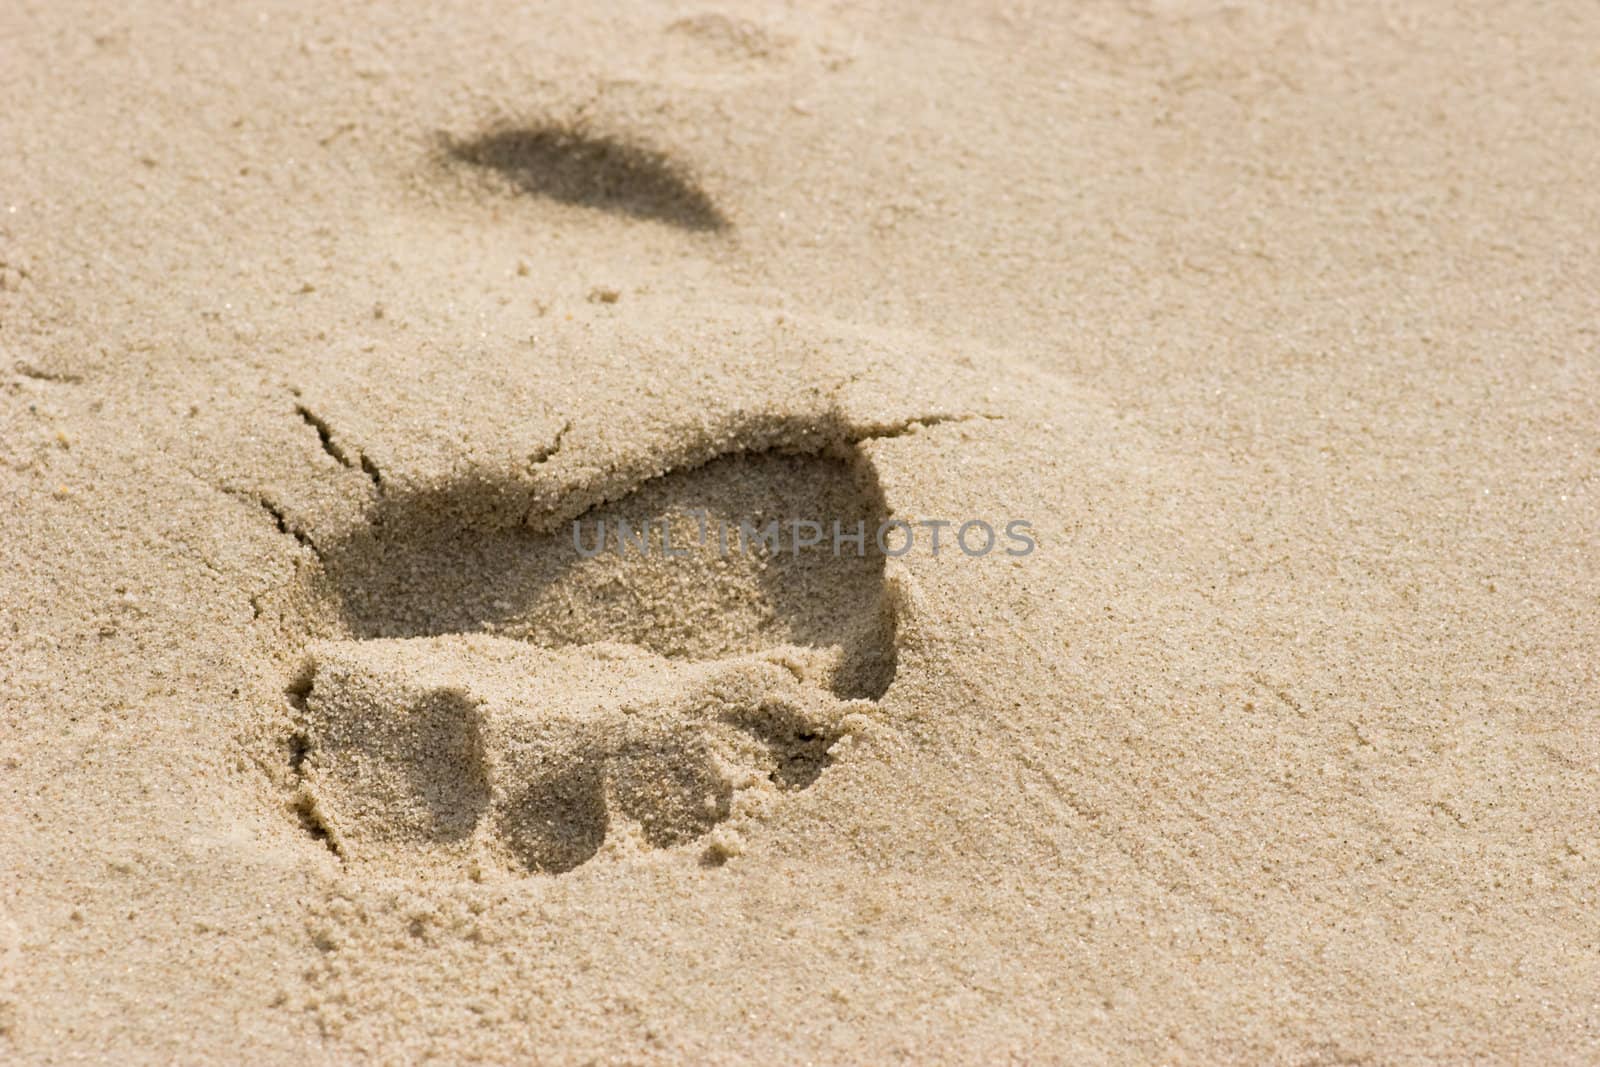 Footprint on sand by naumoid